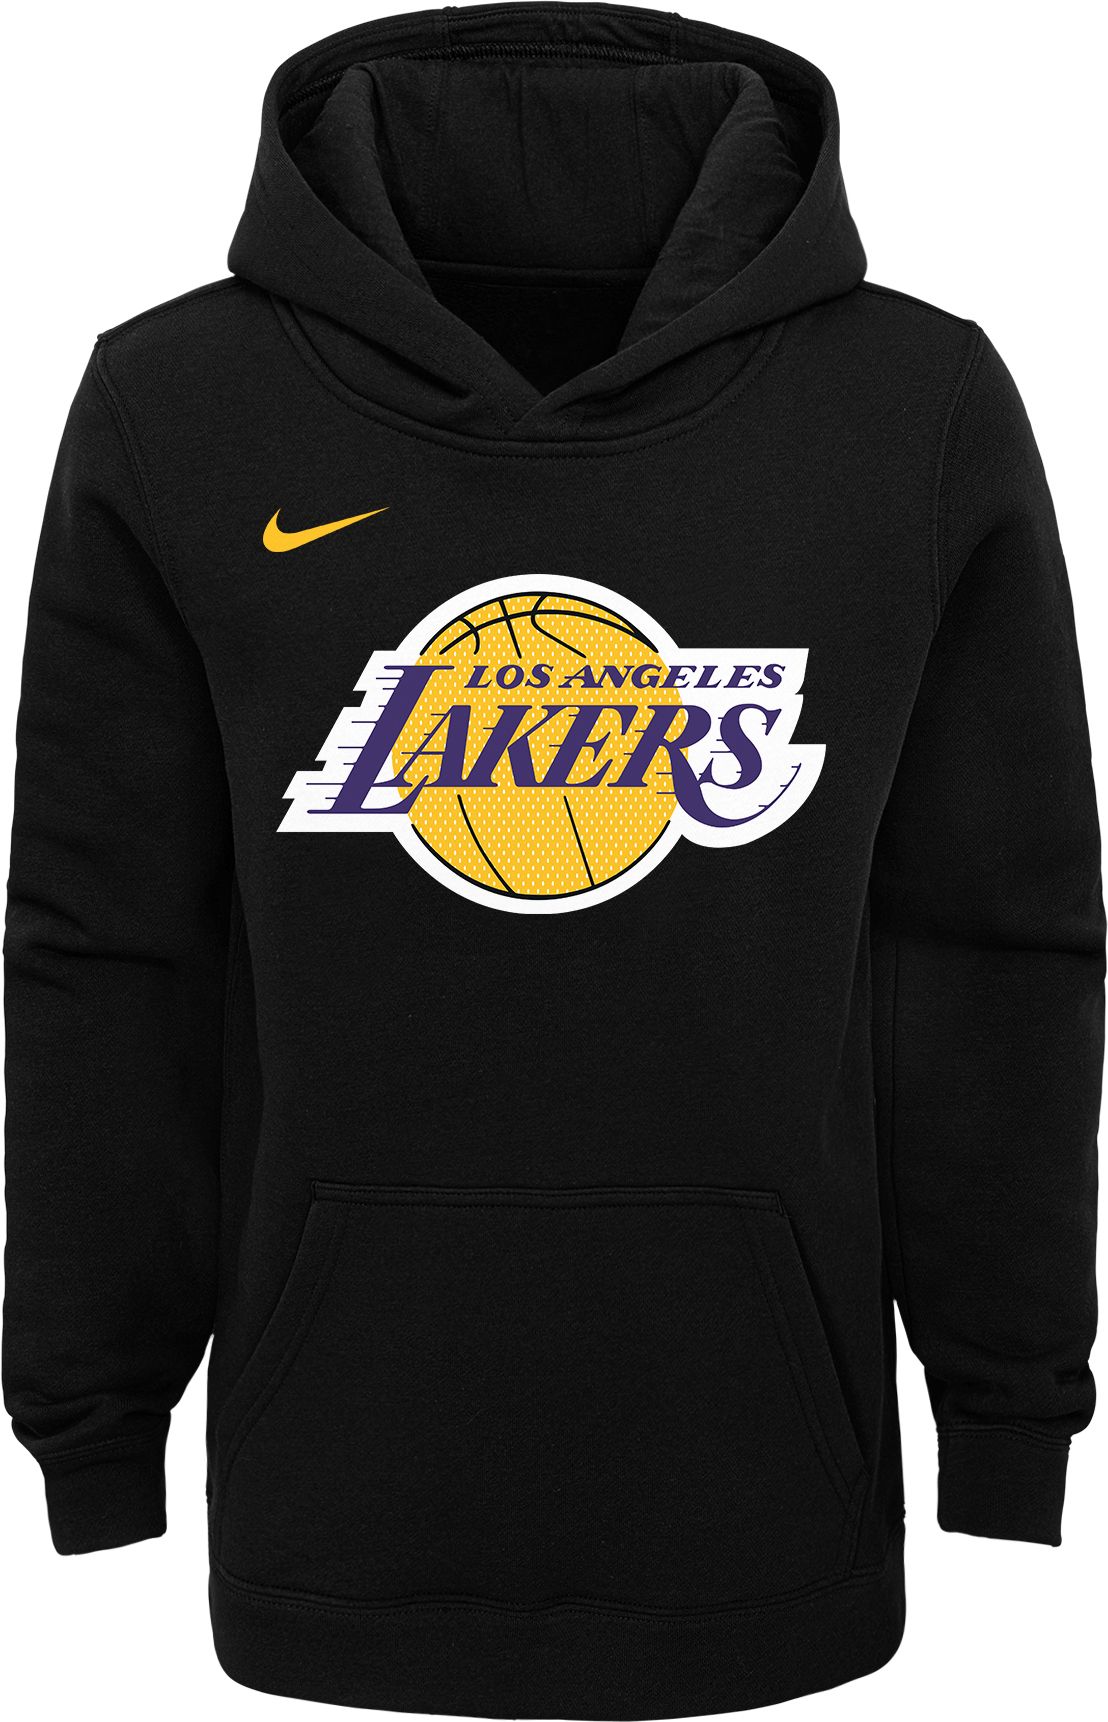 Nike Lakers Jacket Flash Sales, 54% OFF | www.ingeniovirtual.com